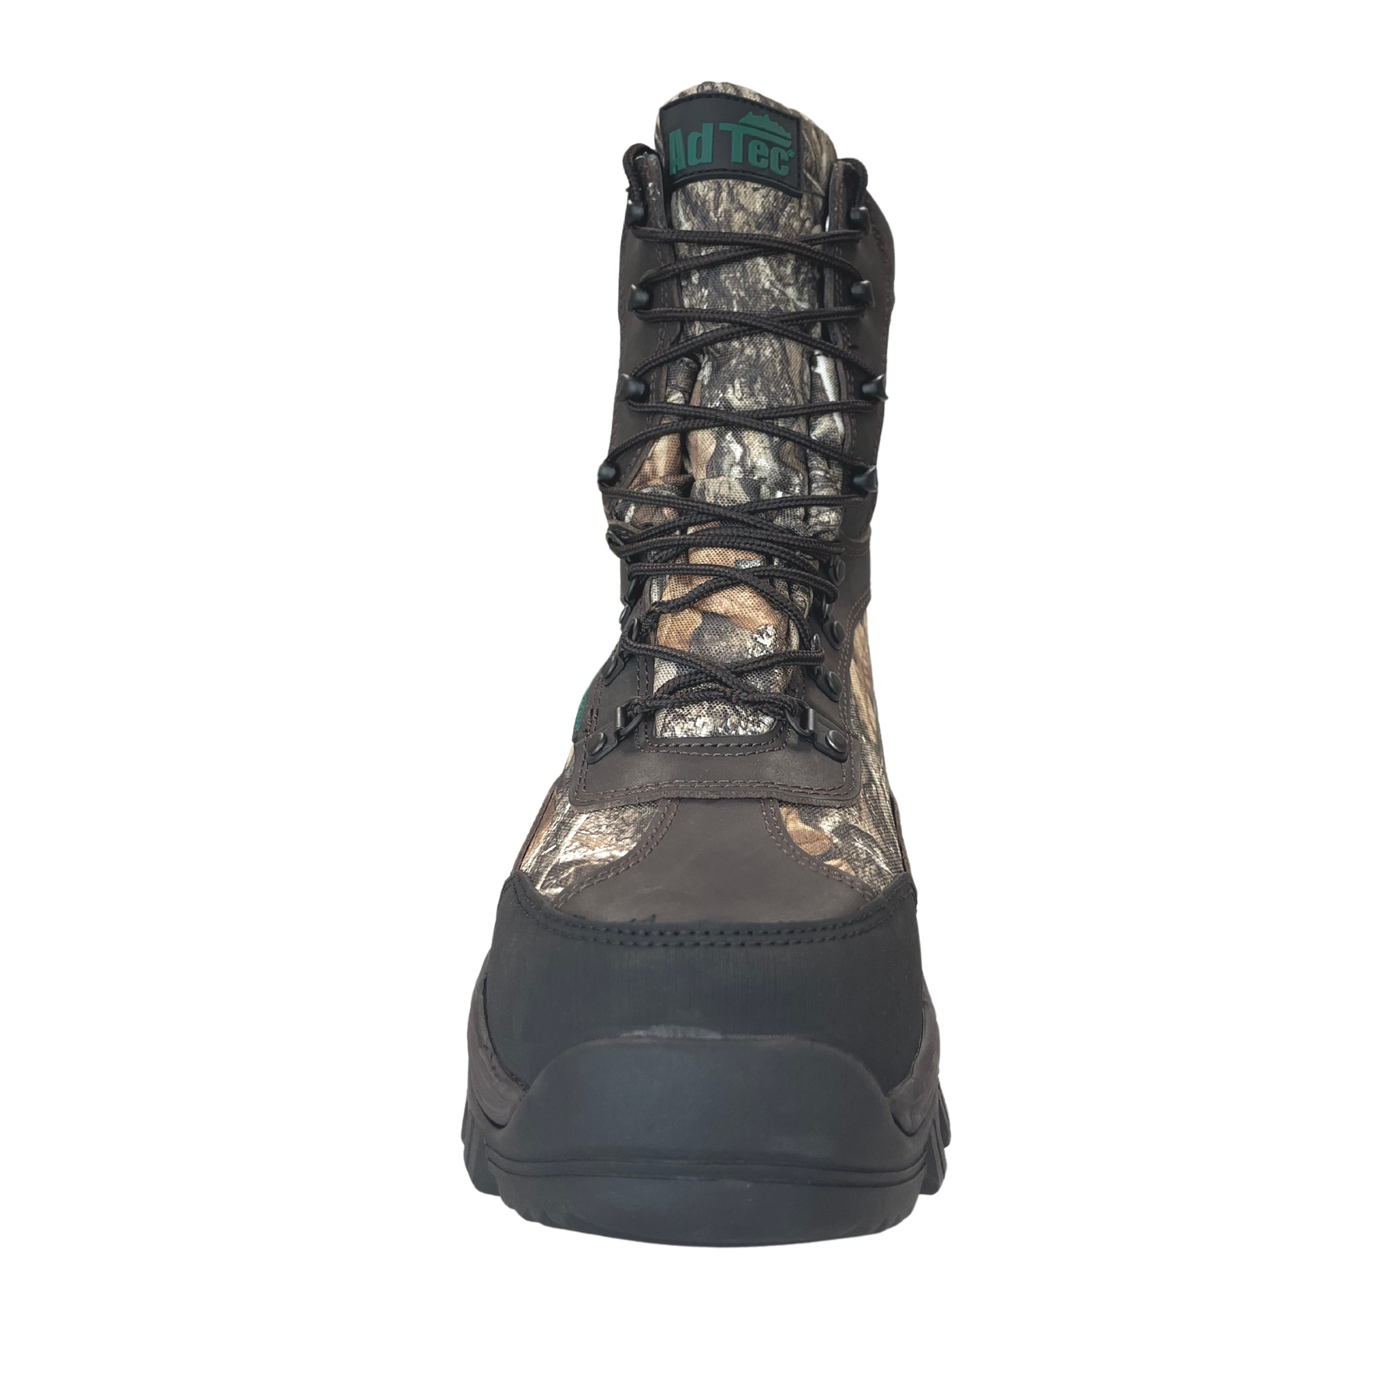 Men's 10" 800g Camo Hunting Boot - 1015 - Shop Genuine Leather men & women's boots online | AdTecFootWear